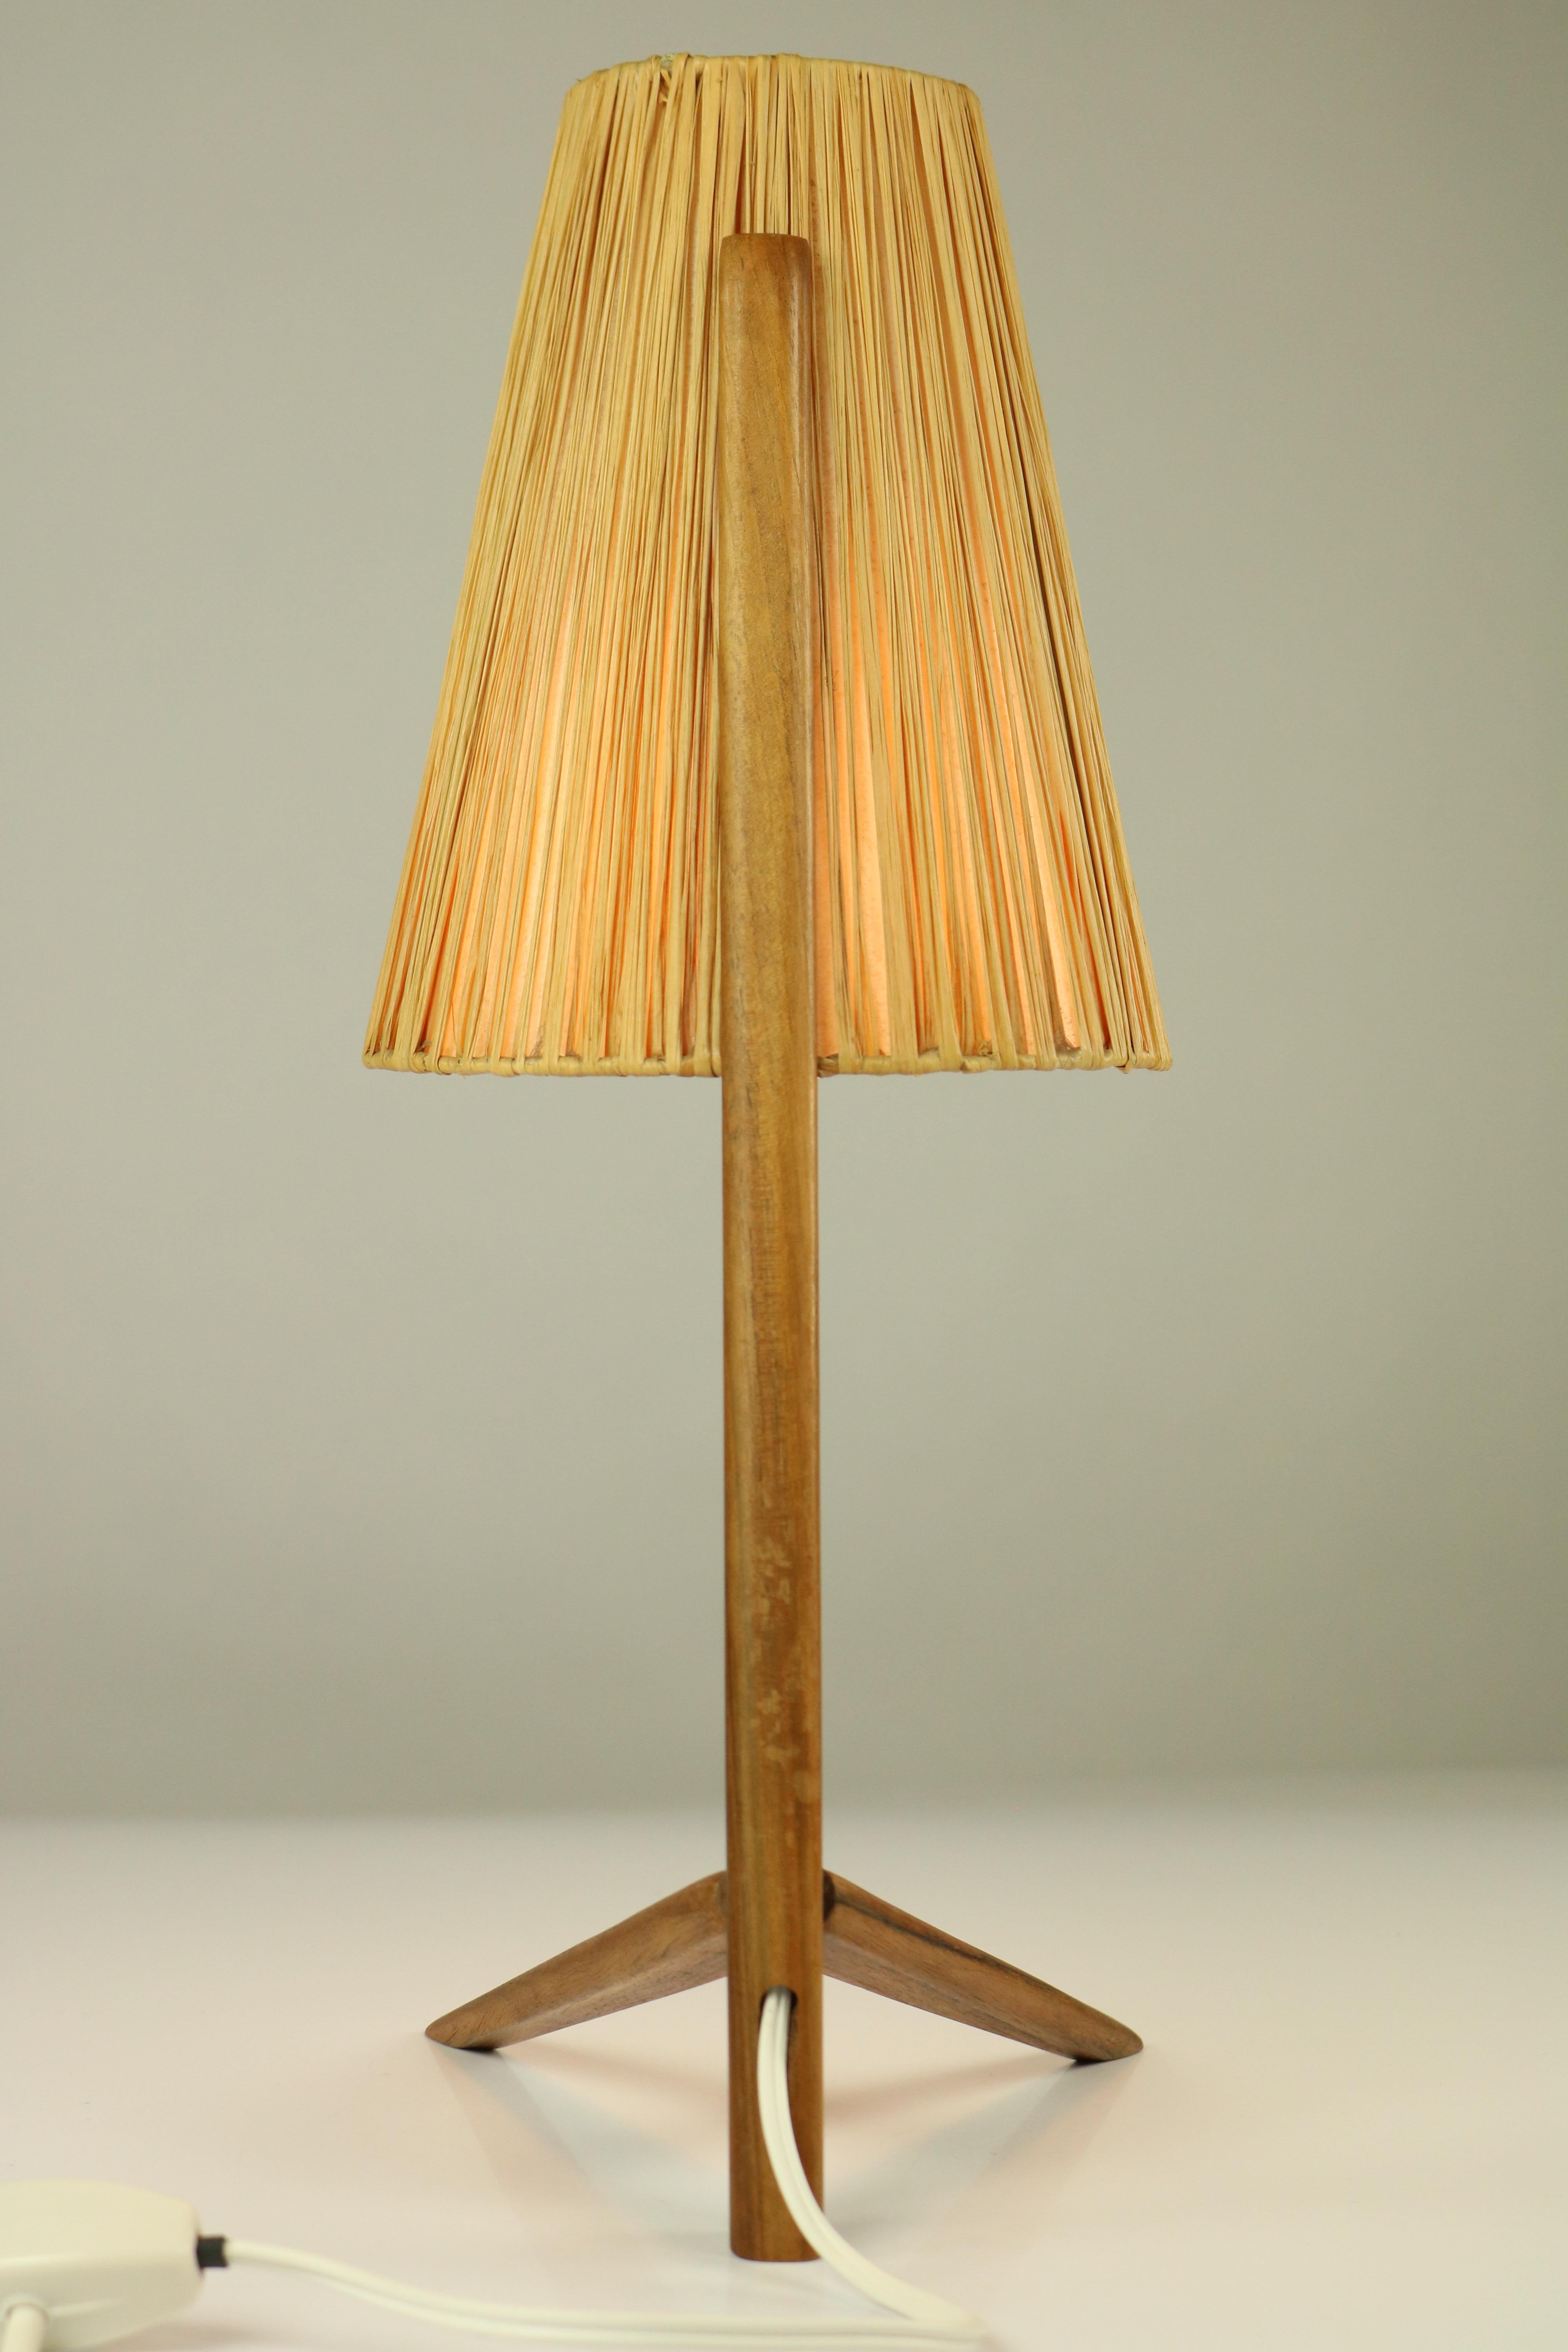 Vintage Teak Table Lamp Crow Foot & Bast Shade Midcentury 1950s Austria Kalmar In Good Condition For Sale In Nürnberg, DE